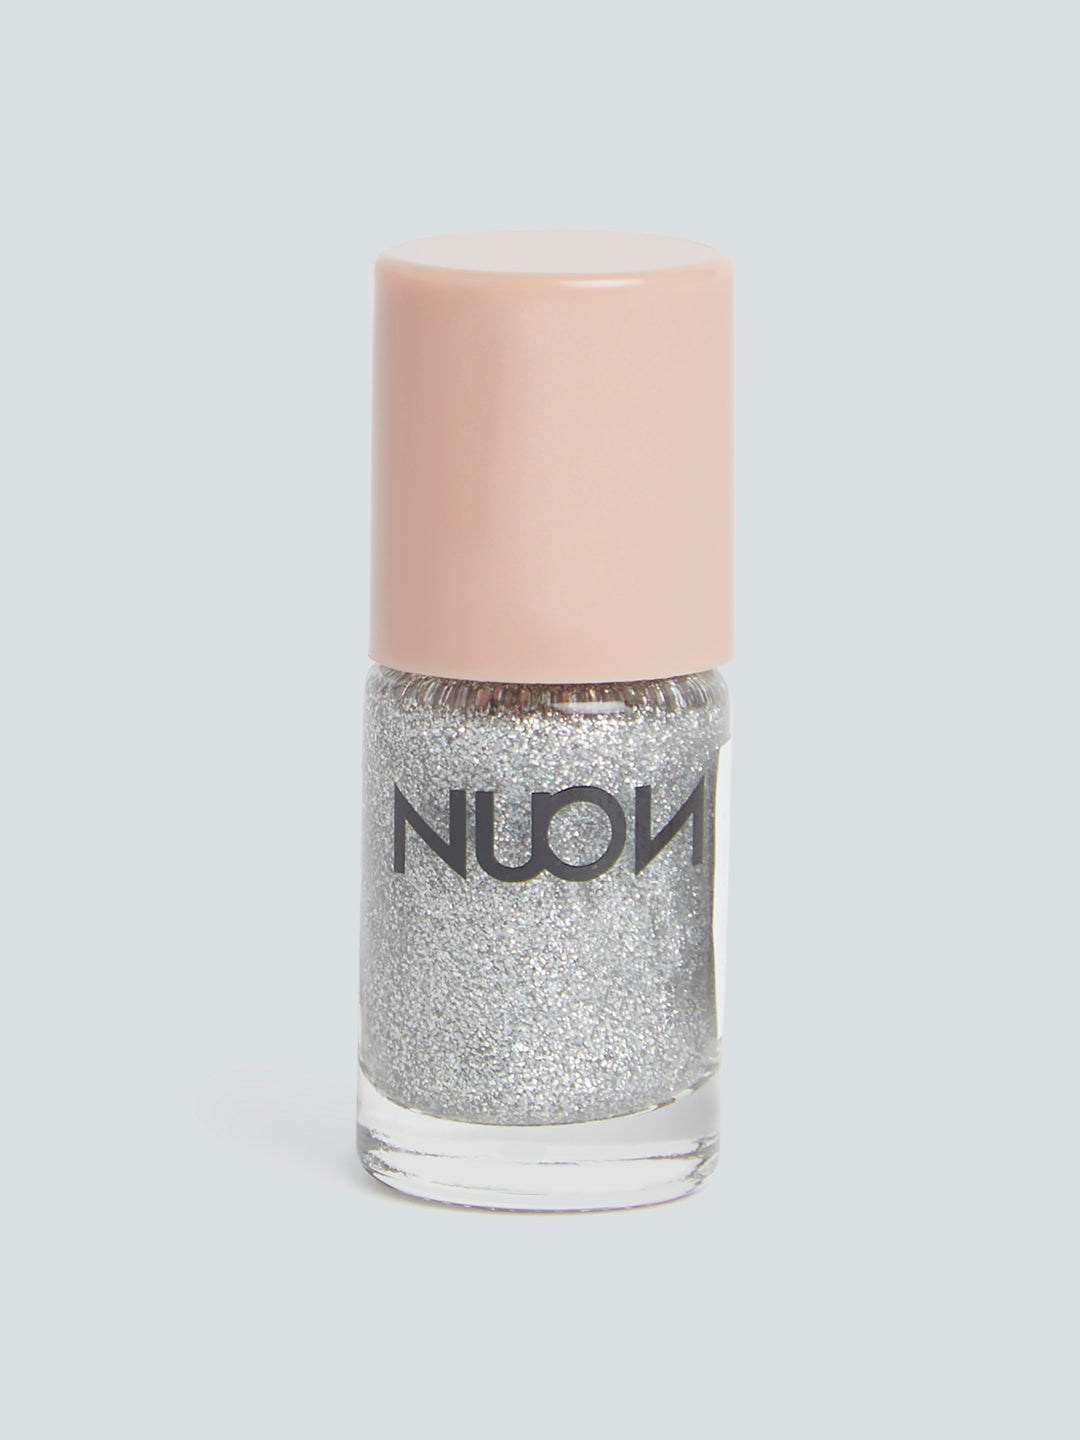 Nuon Nail Colour - NME2, 6 ml